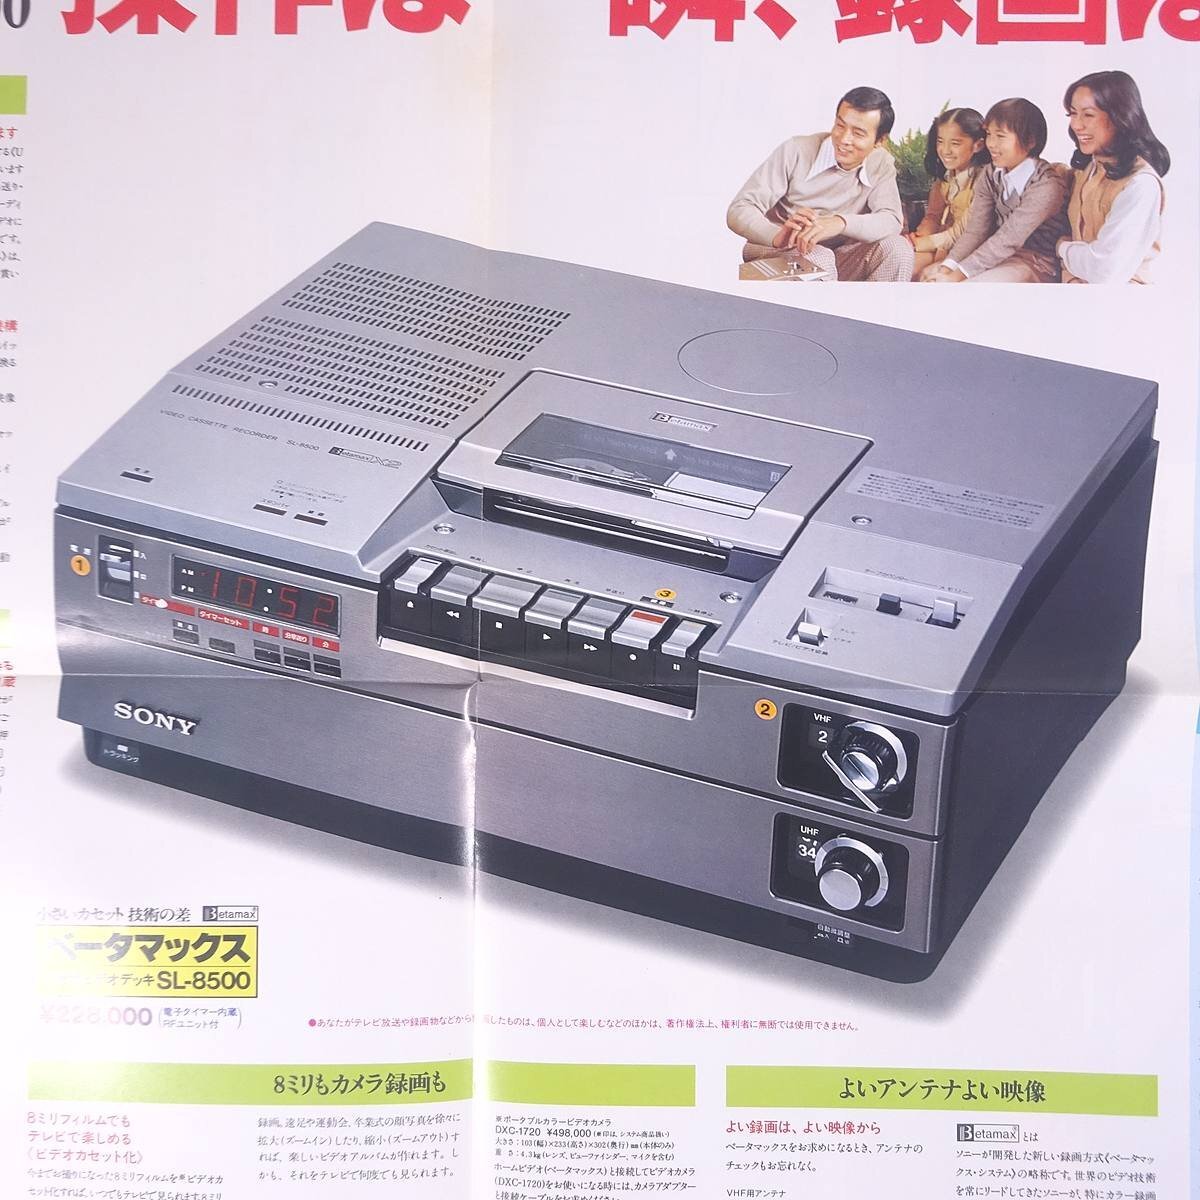 SONY ソニー ベータマックス SL-8500 1978 小冊子 カタログ パンフレット ビデオデッキ 2時間ビデオデッキ_画像7